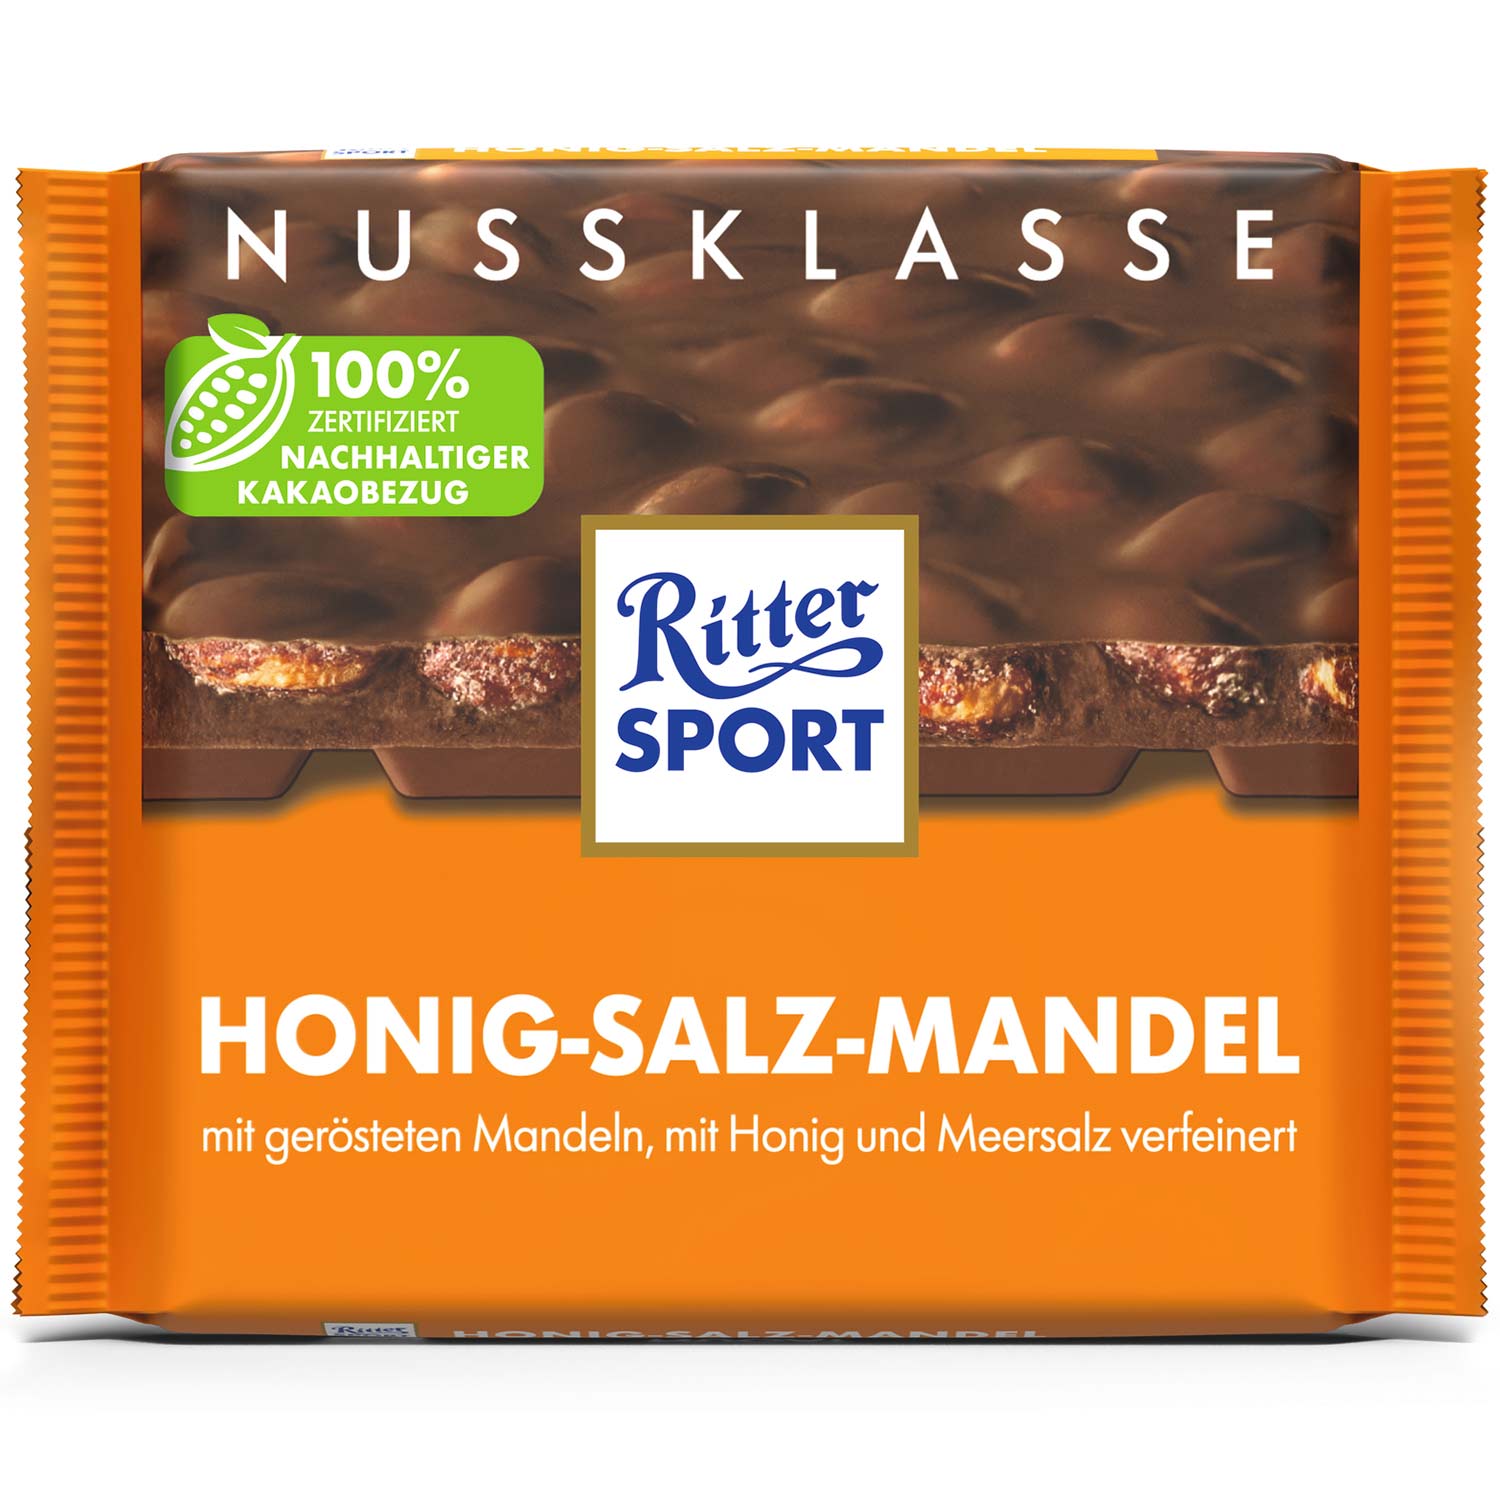 Ritter Sport Milk Honey Salt Whole Almond (Germany)